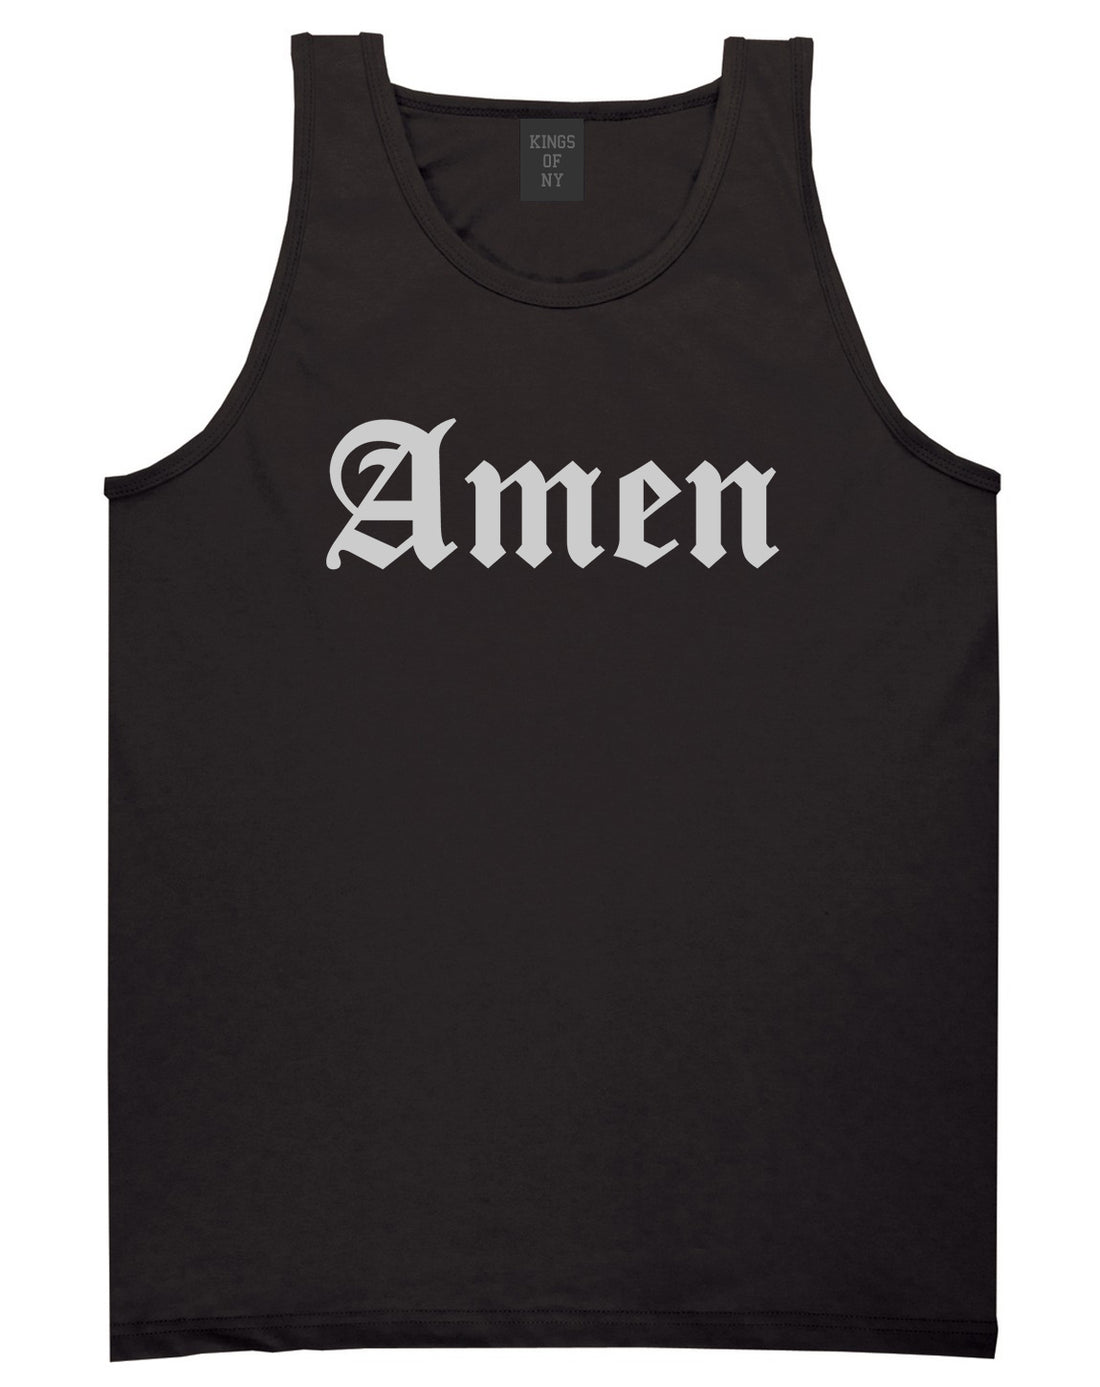 Amen Old English Prayer Mens Tank Top T-Shirt Black